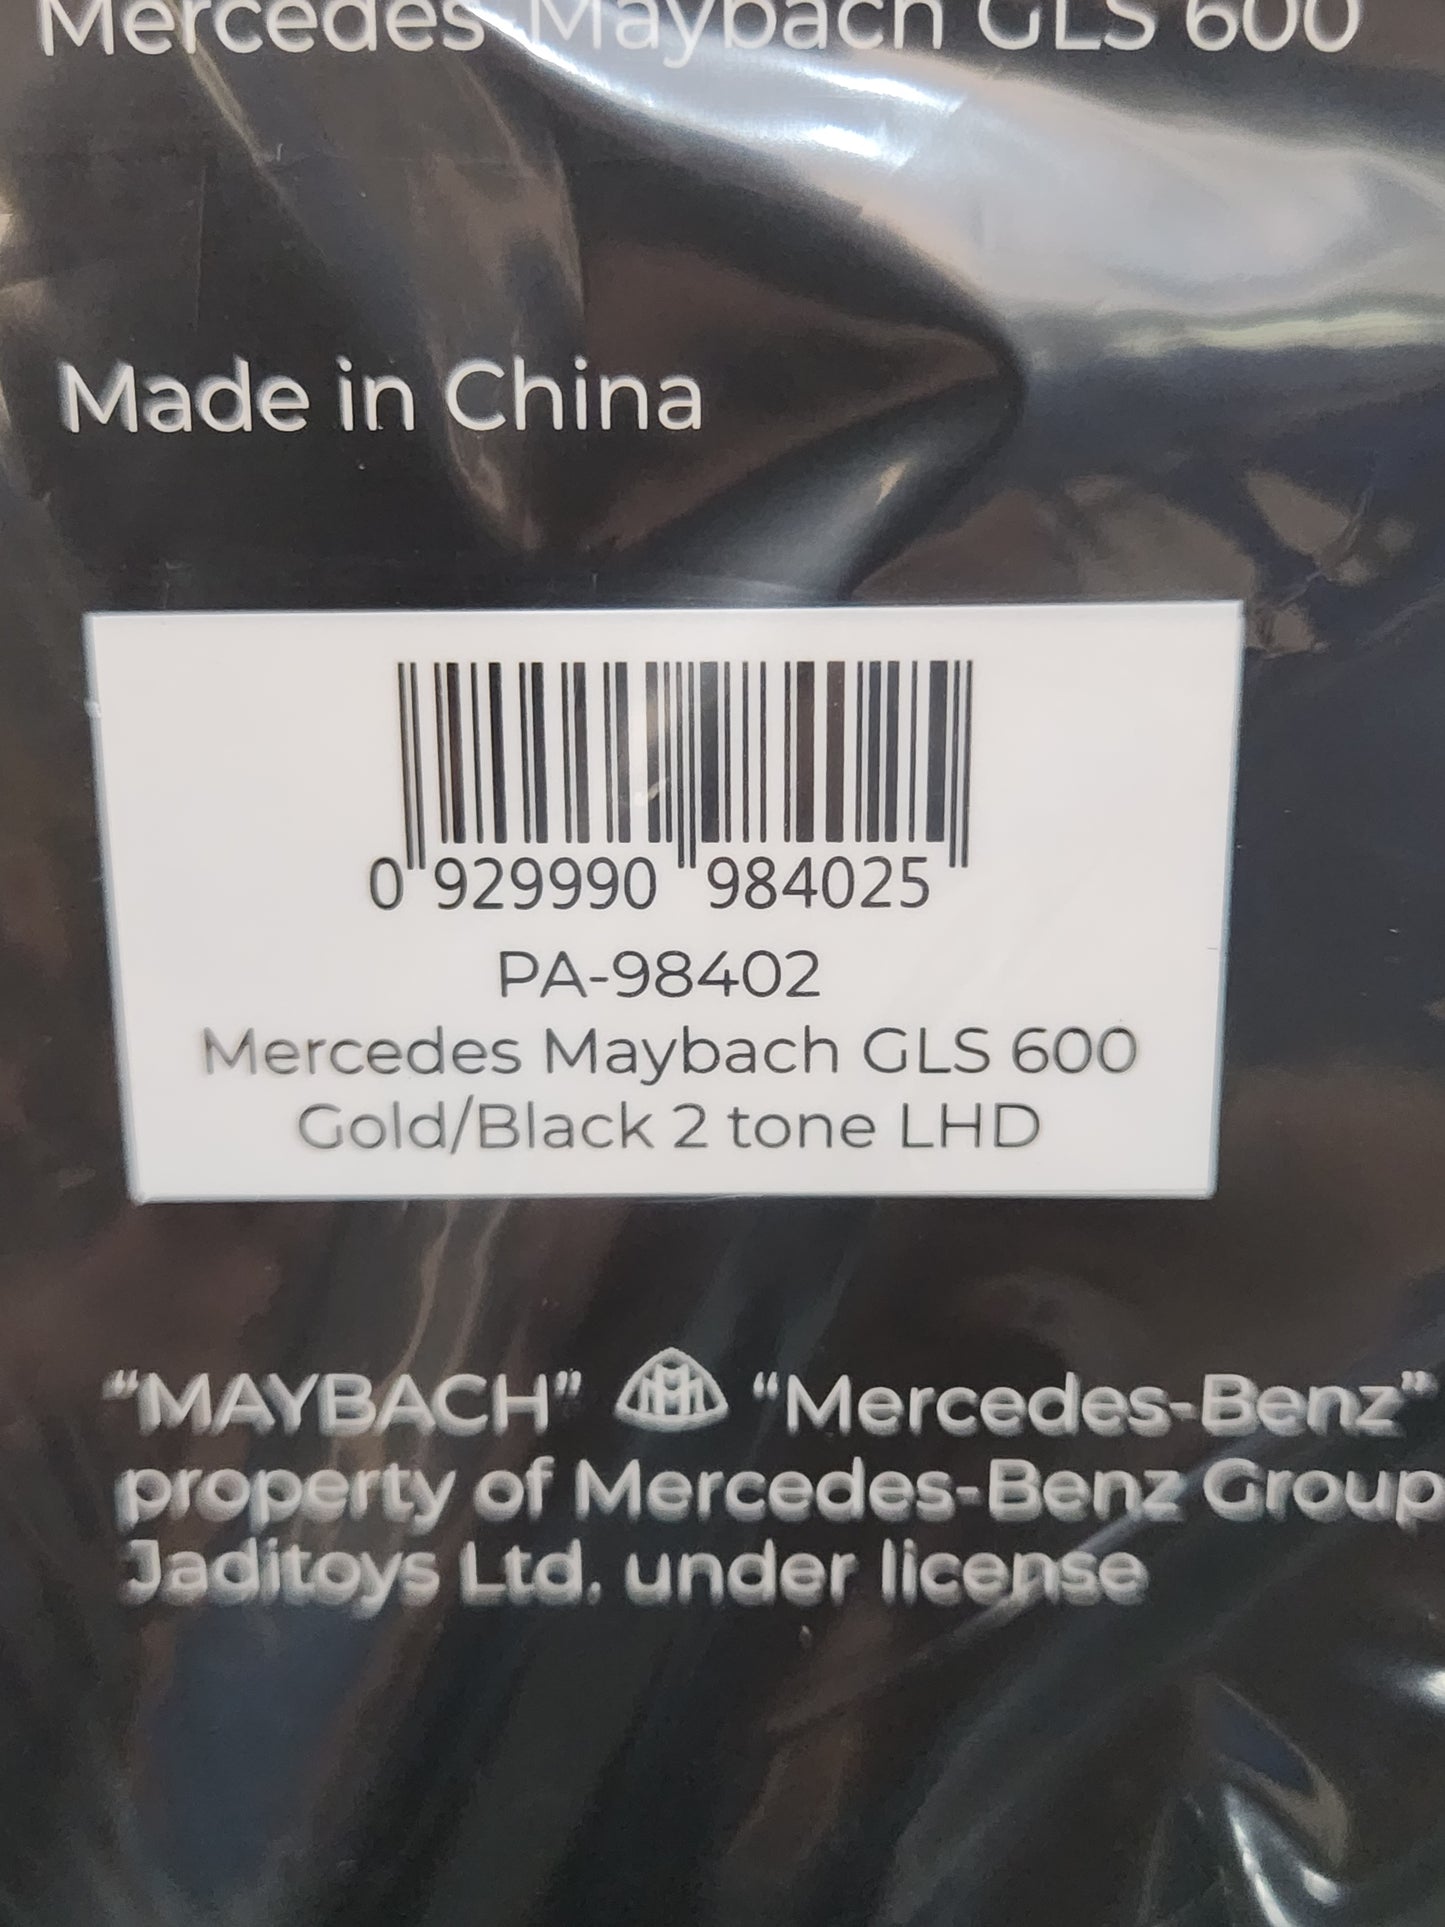 Paragon Mercedes-Maybach GLS 600 Gold/Black 2 Tone LHD